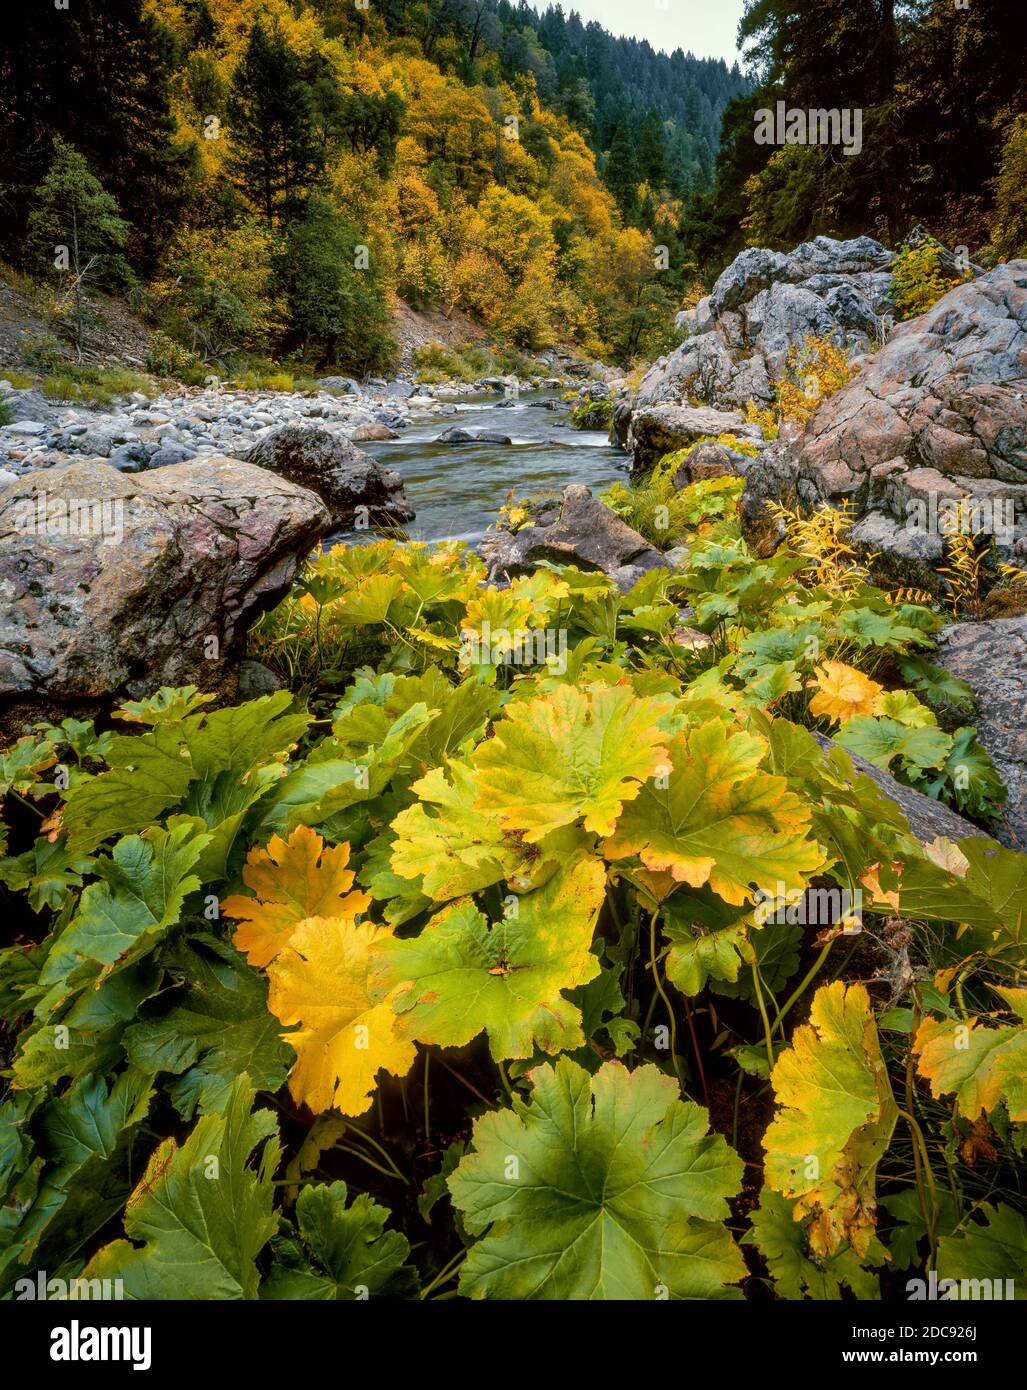 India Rhubarb, Saxifrage, Yuba River, Tahoe National Forest, California Foto de stock